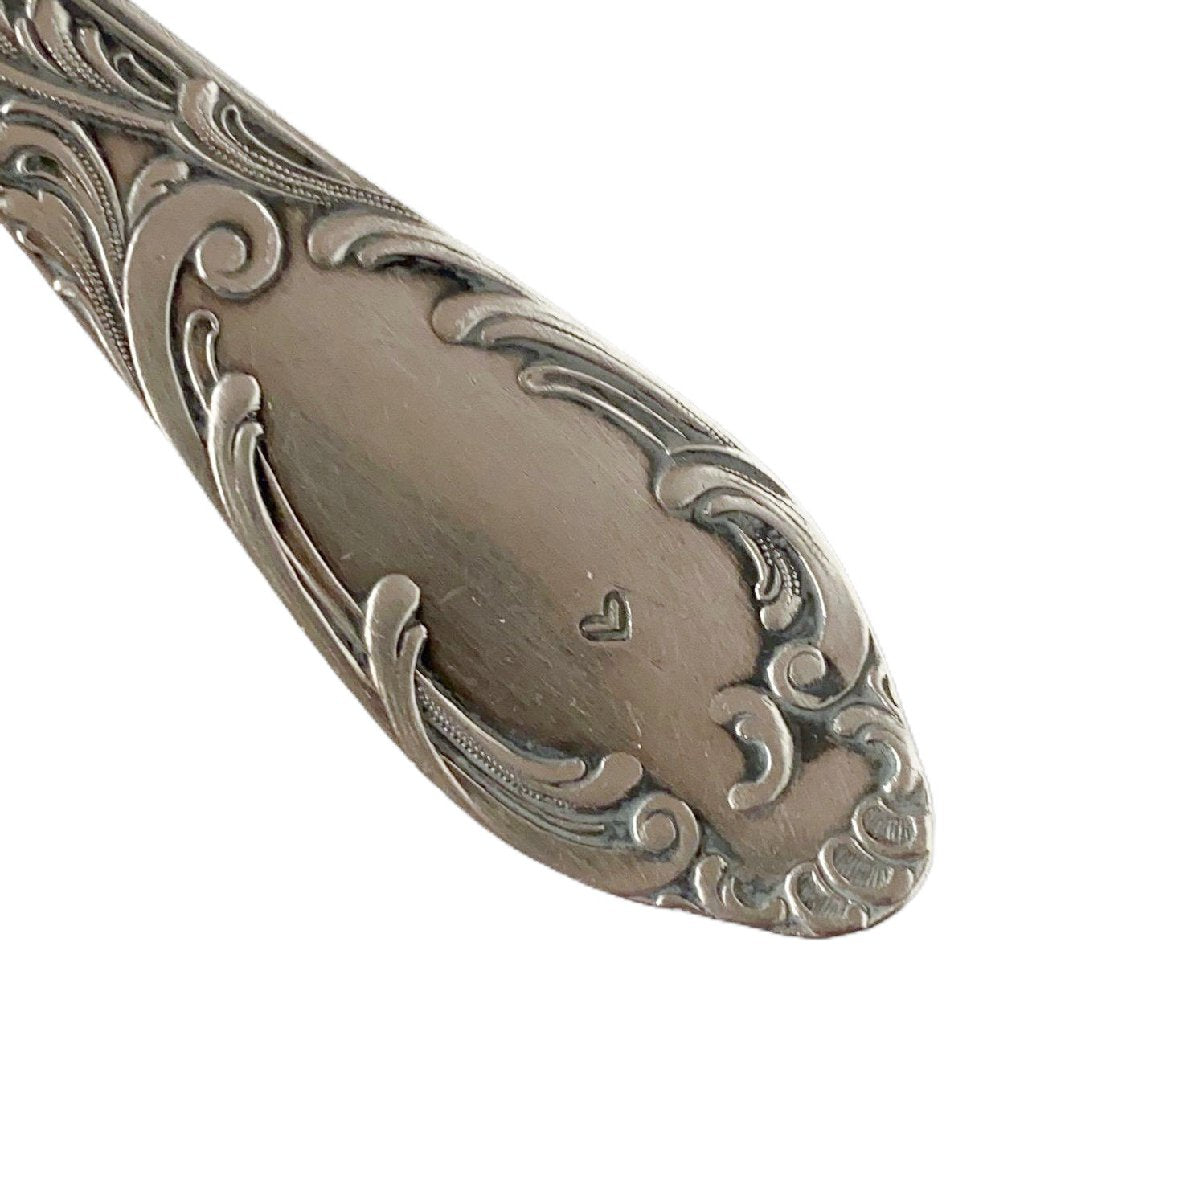 mondocherry - antique silverware serving spoon | "thankful" - handle